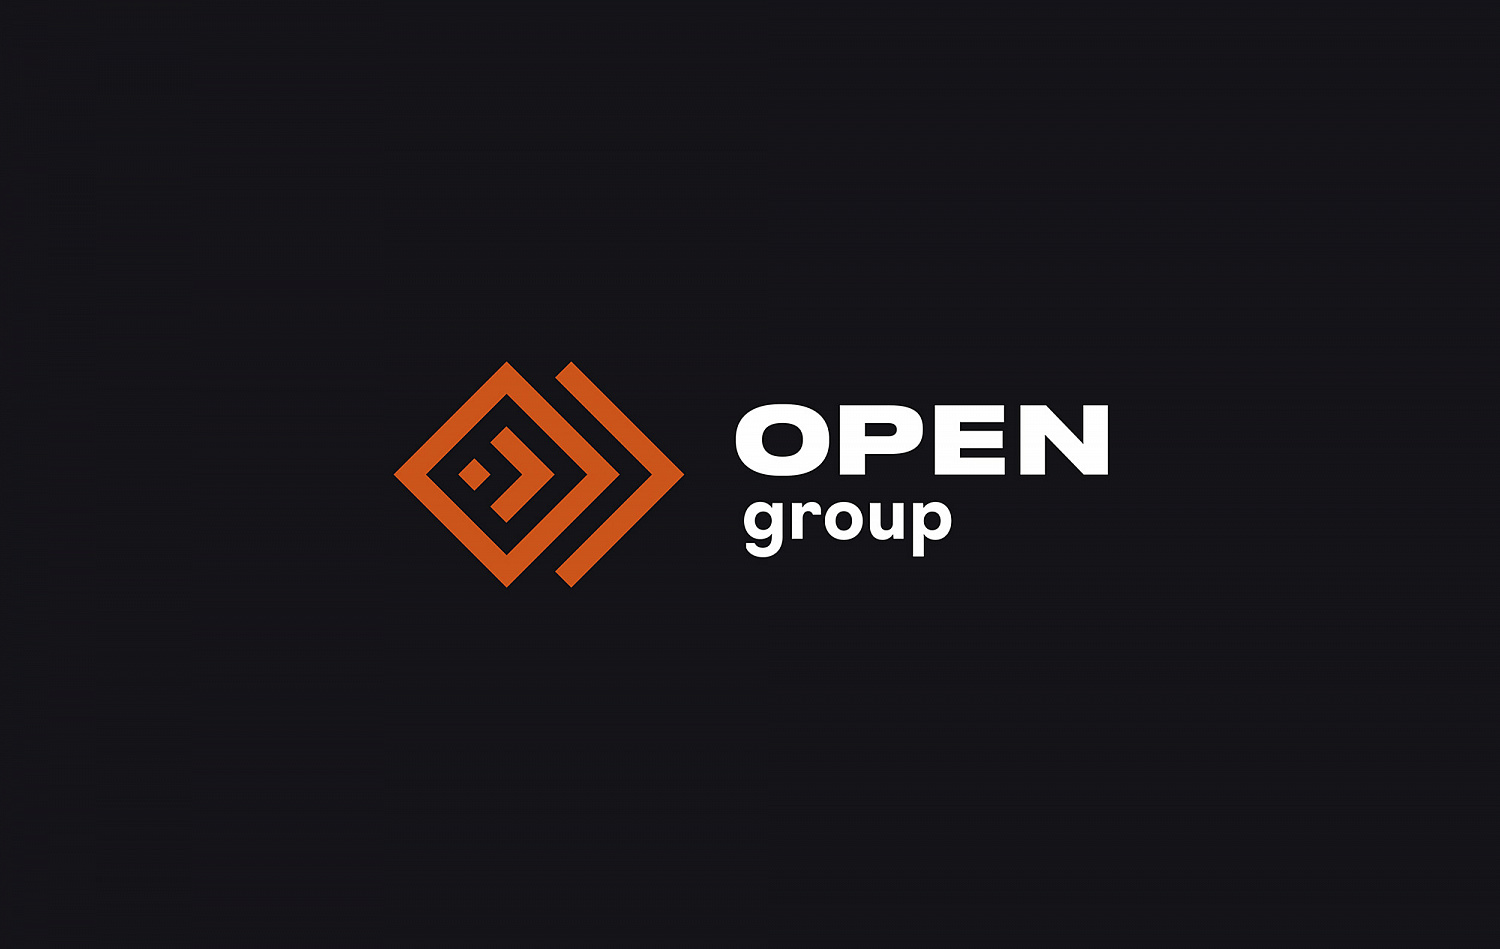 OPEN group - Портфолио Depot